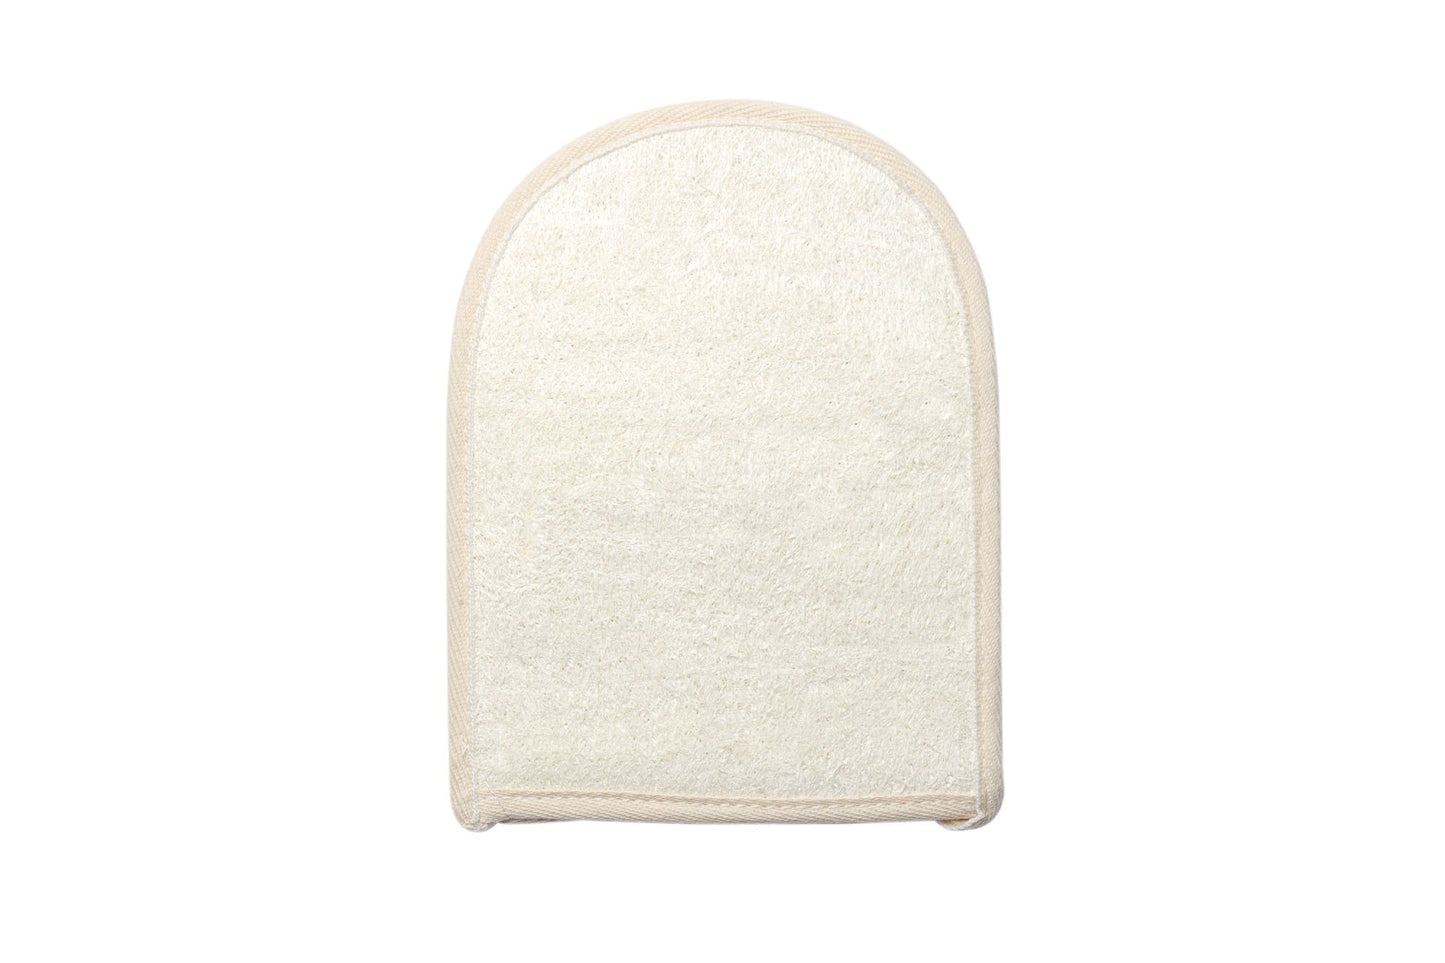 Front of bathing mitt on white background